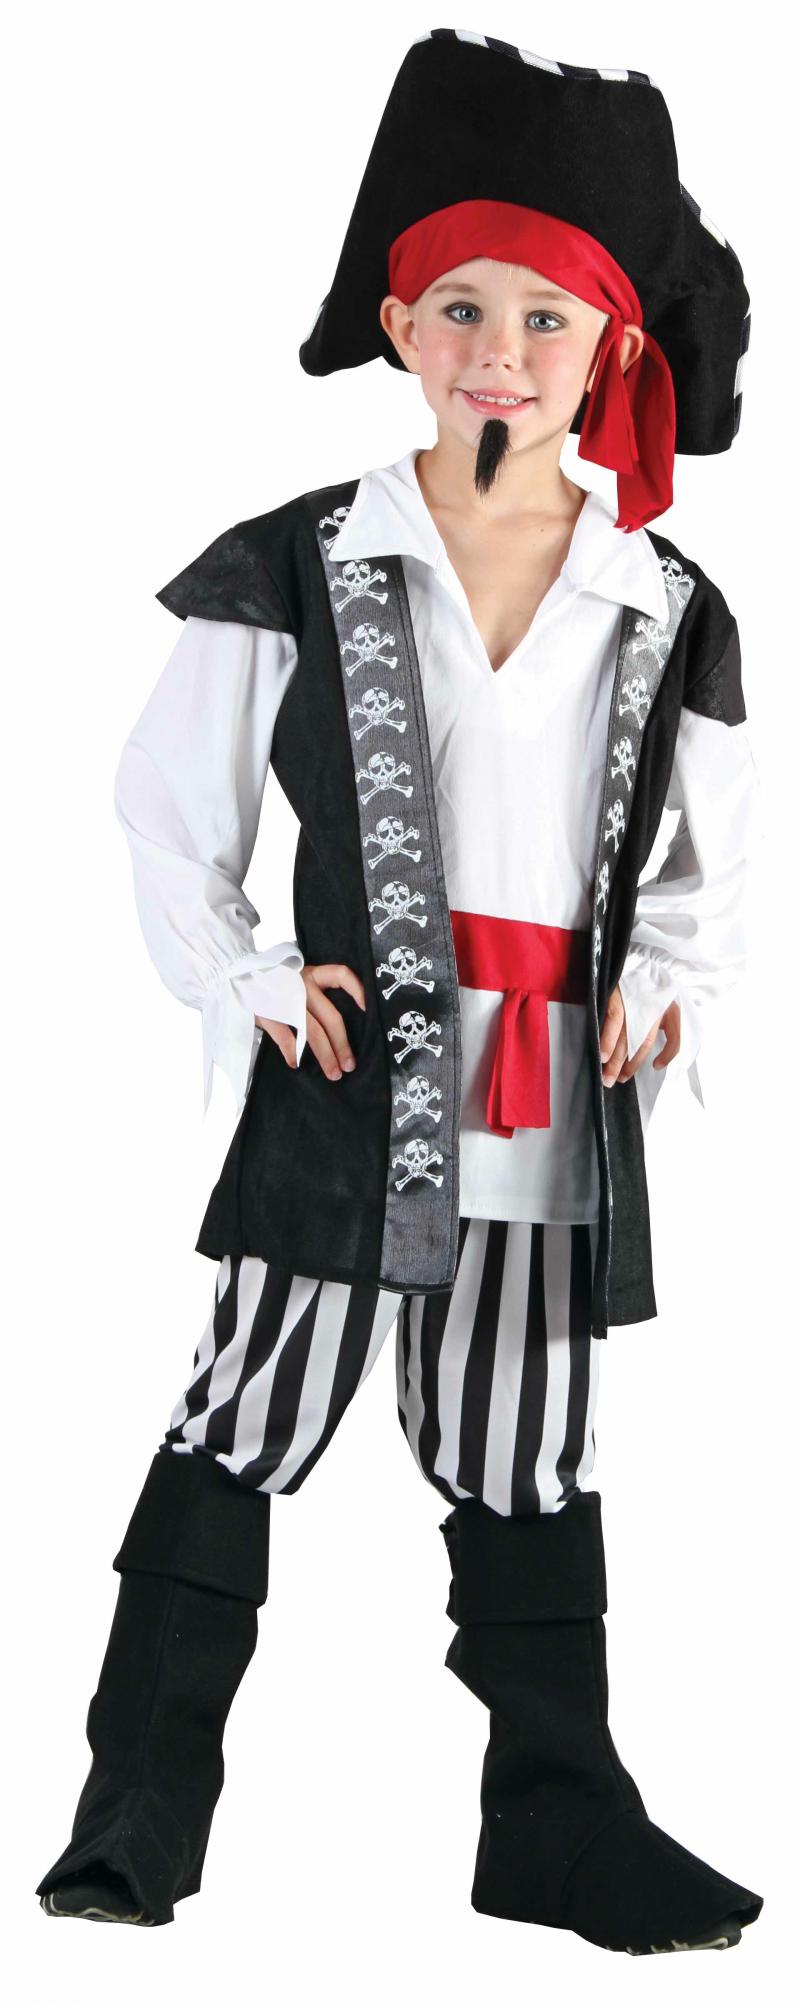 Costume Pirate Garçon Luxe pas cher